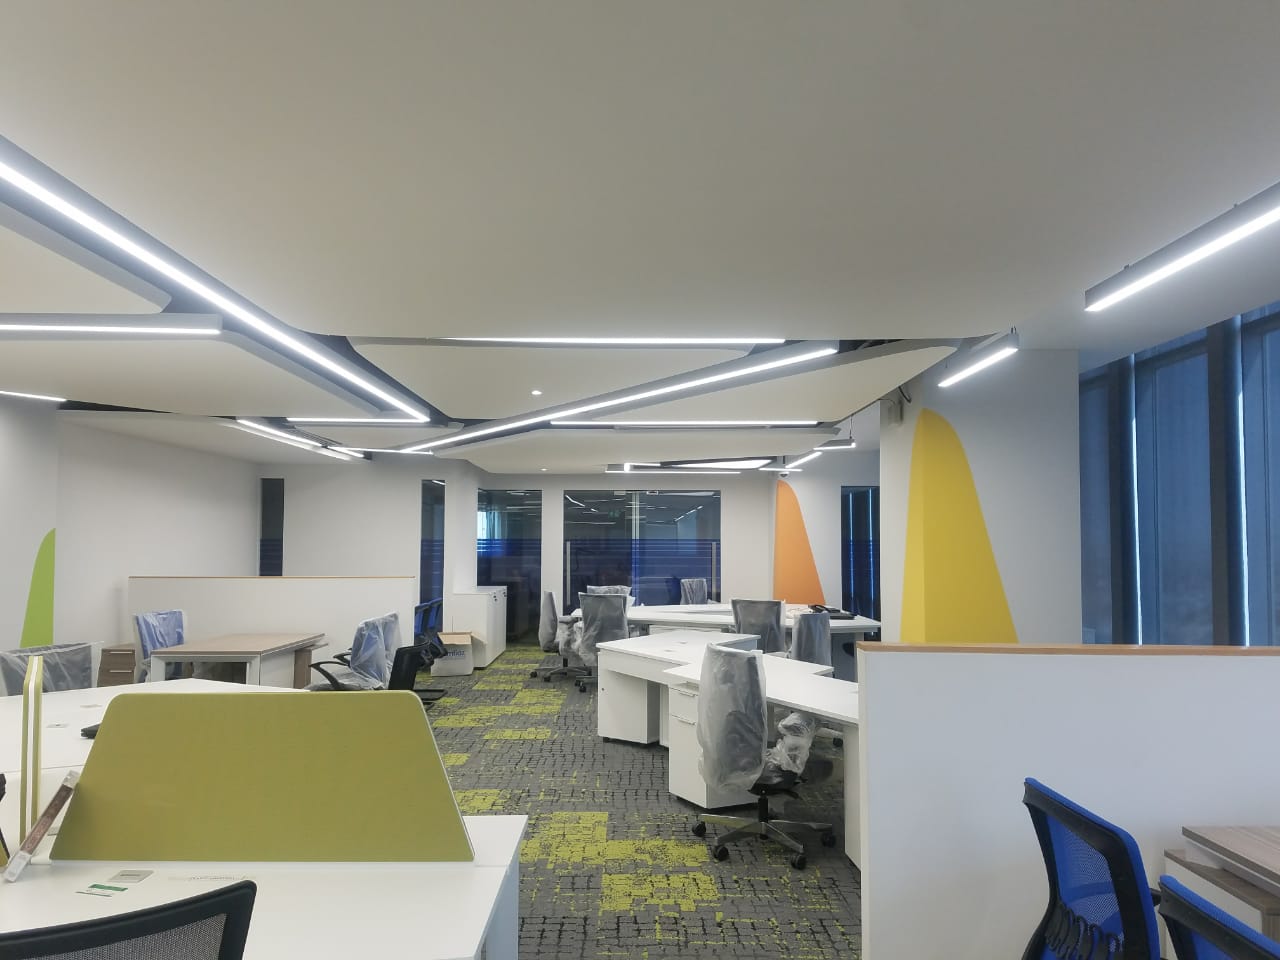 LED 办公室线性灯 LL0101M